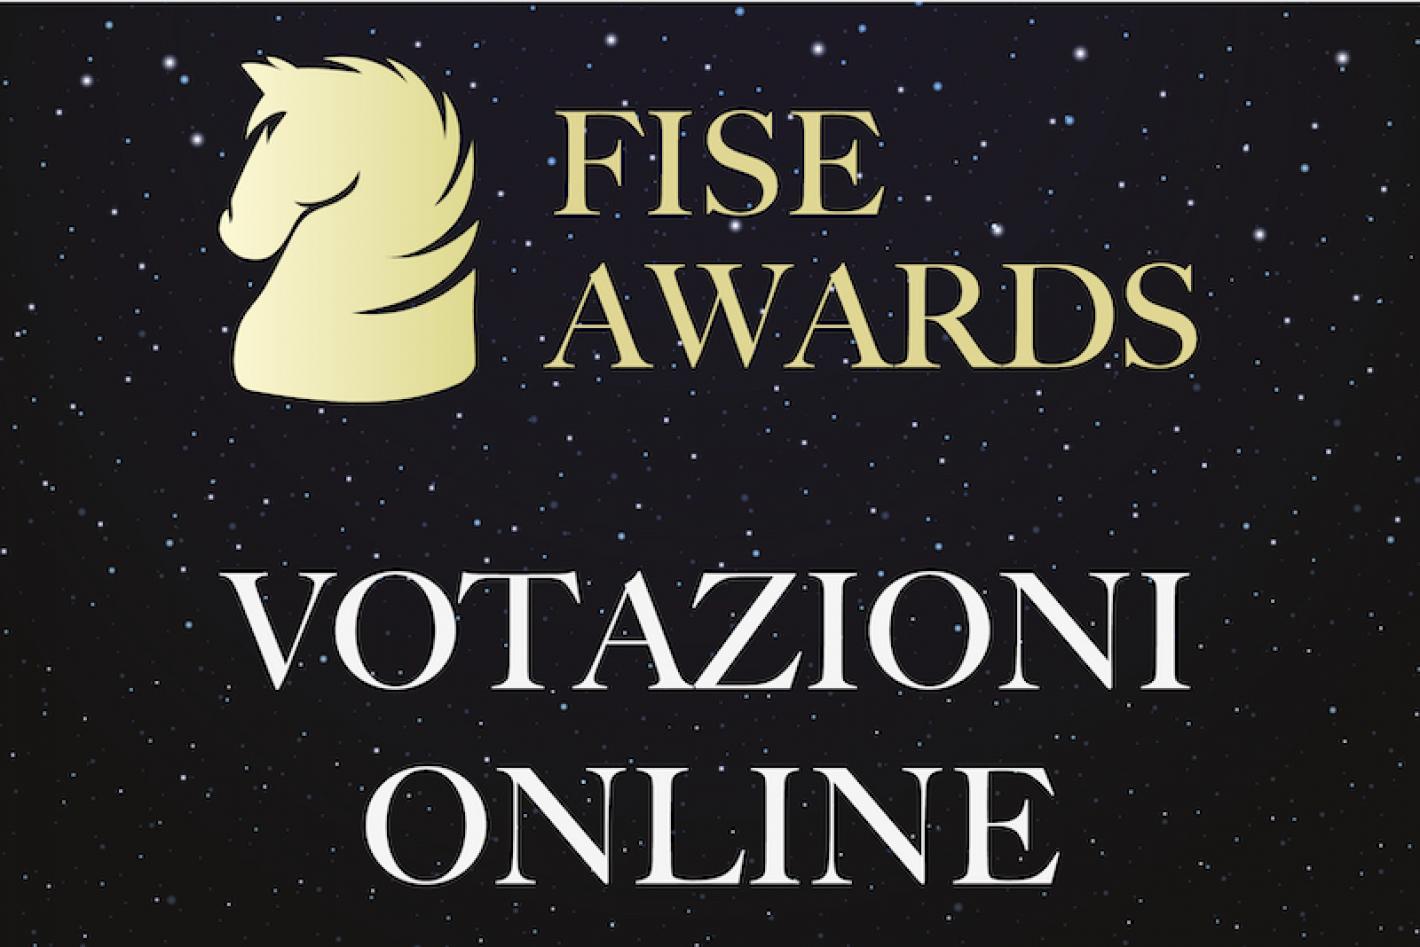 images/lombardia/News/Formazione/medium/Fise_awards_2021.jpg